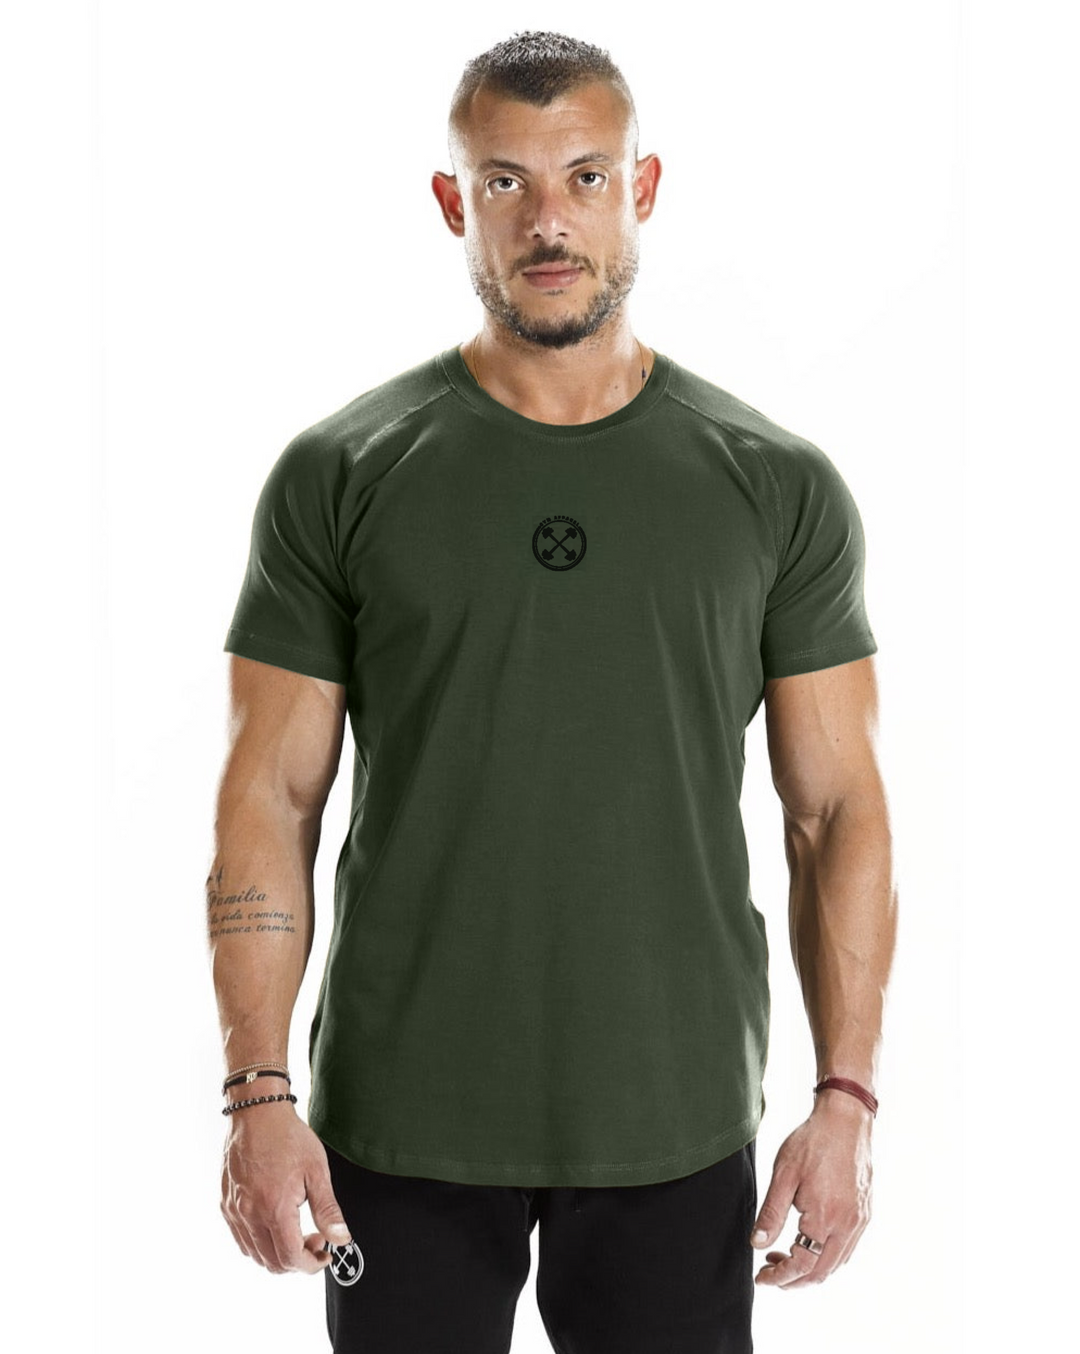 Bar-Basic Raglan T-shirt [Cotton/Lycra] - T-Shirt - Gym Apparel Egypt